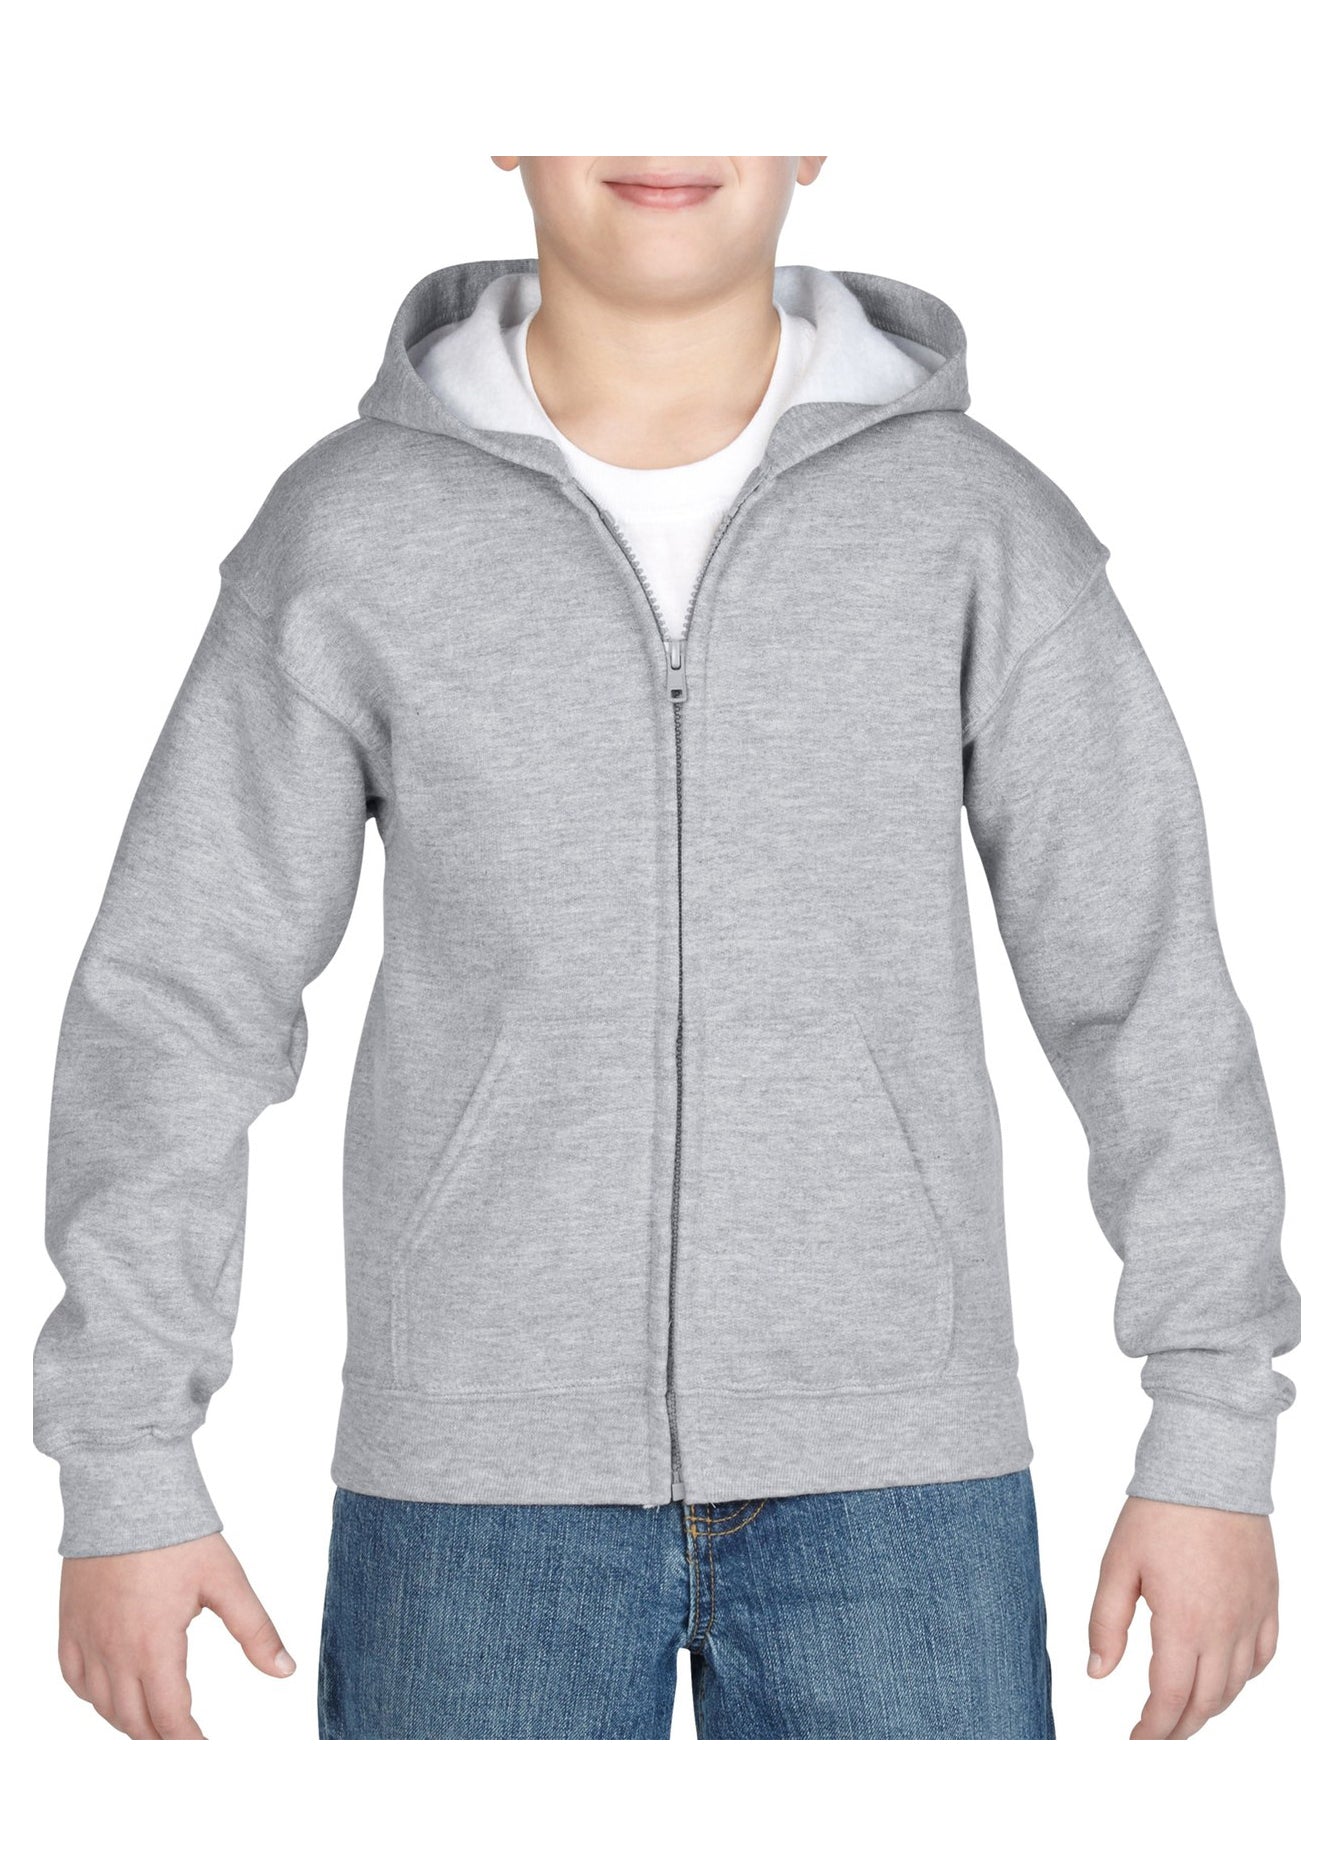 Gildan Kids Heavy Blend Youth Full Zip Sweatshirt